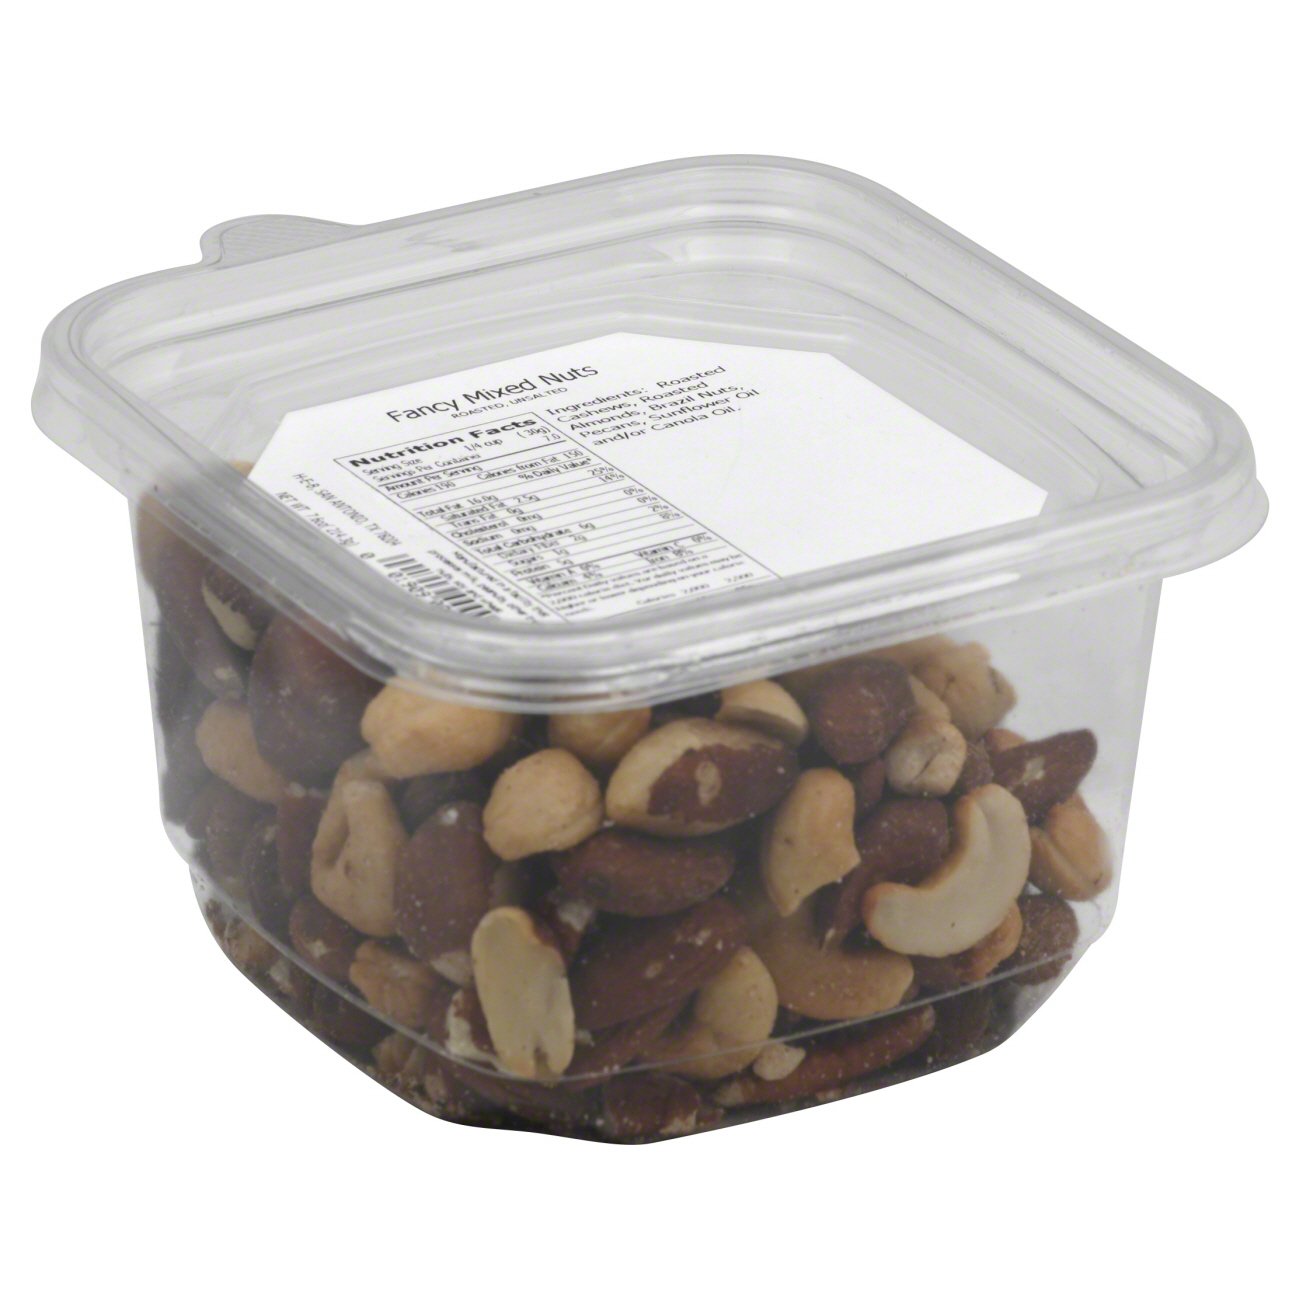 H-E-B Honey Roasted Mixed Nuts - Shop Nuts & Seeds at H-E-B